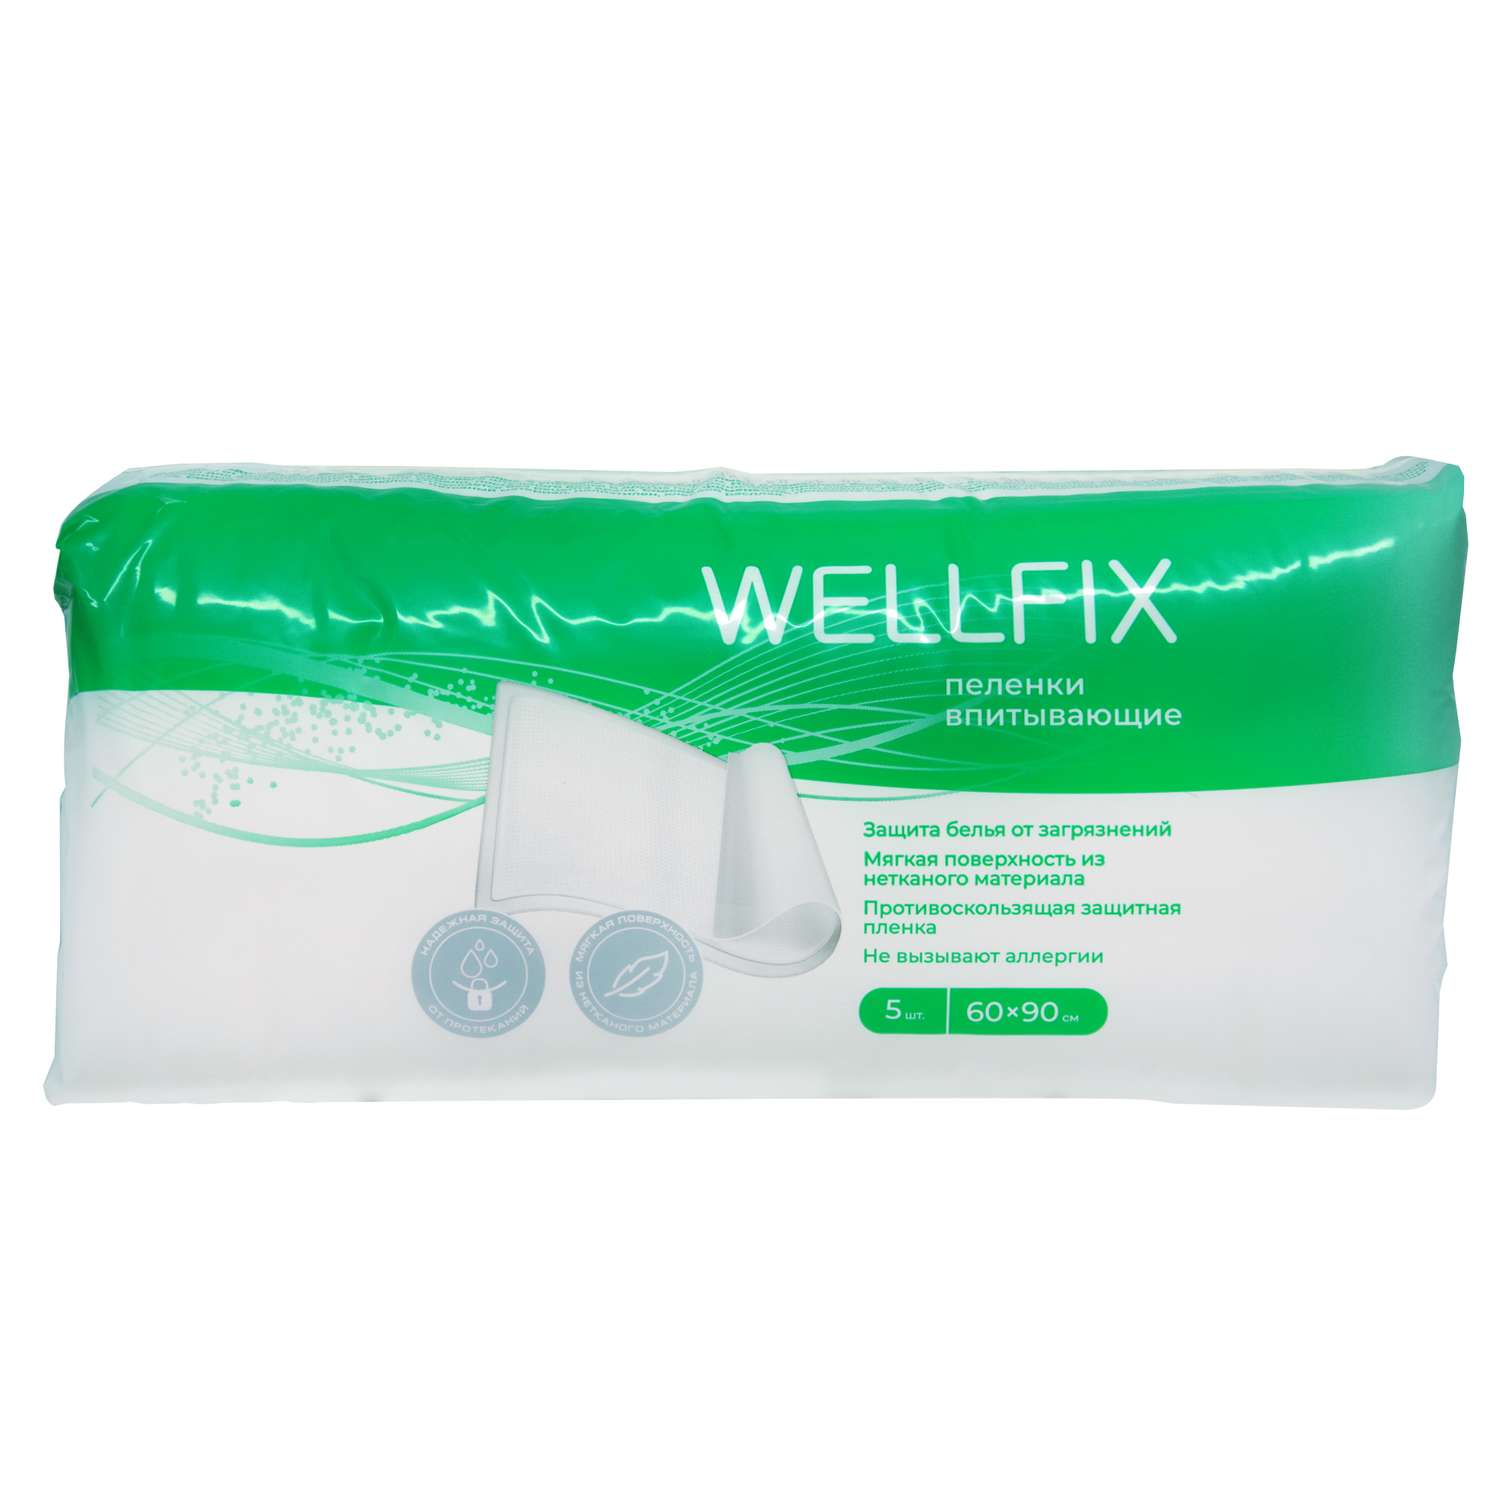 Пеленки медицинские Wellfix впитывающие размер 60х90 5 штук - фото 1